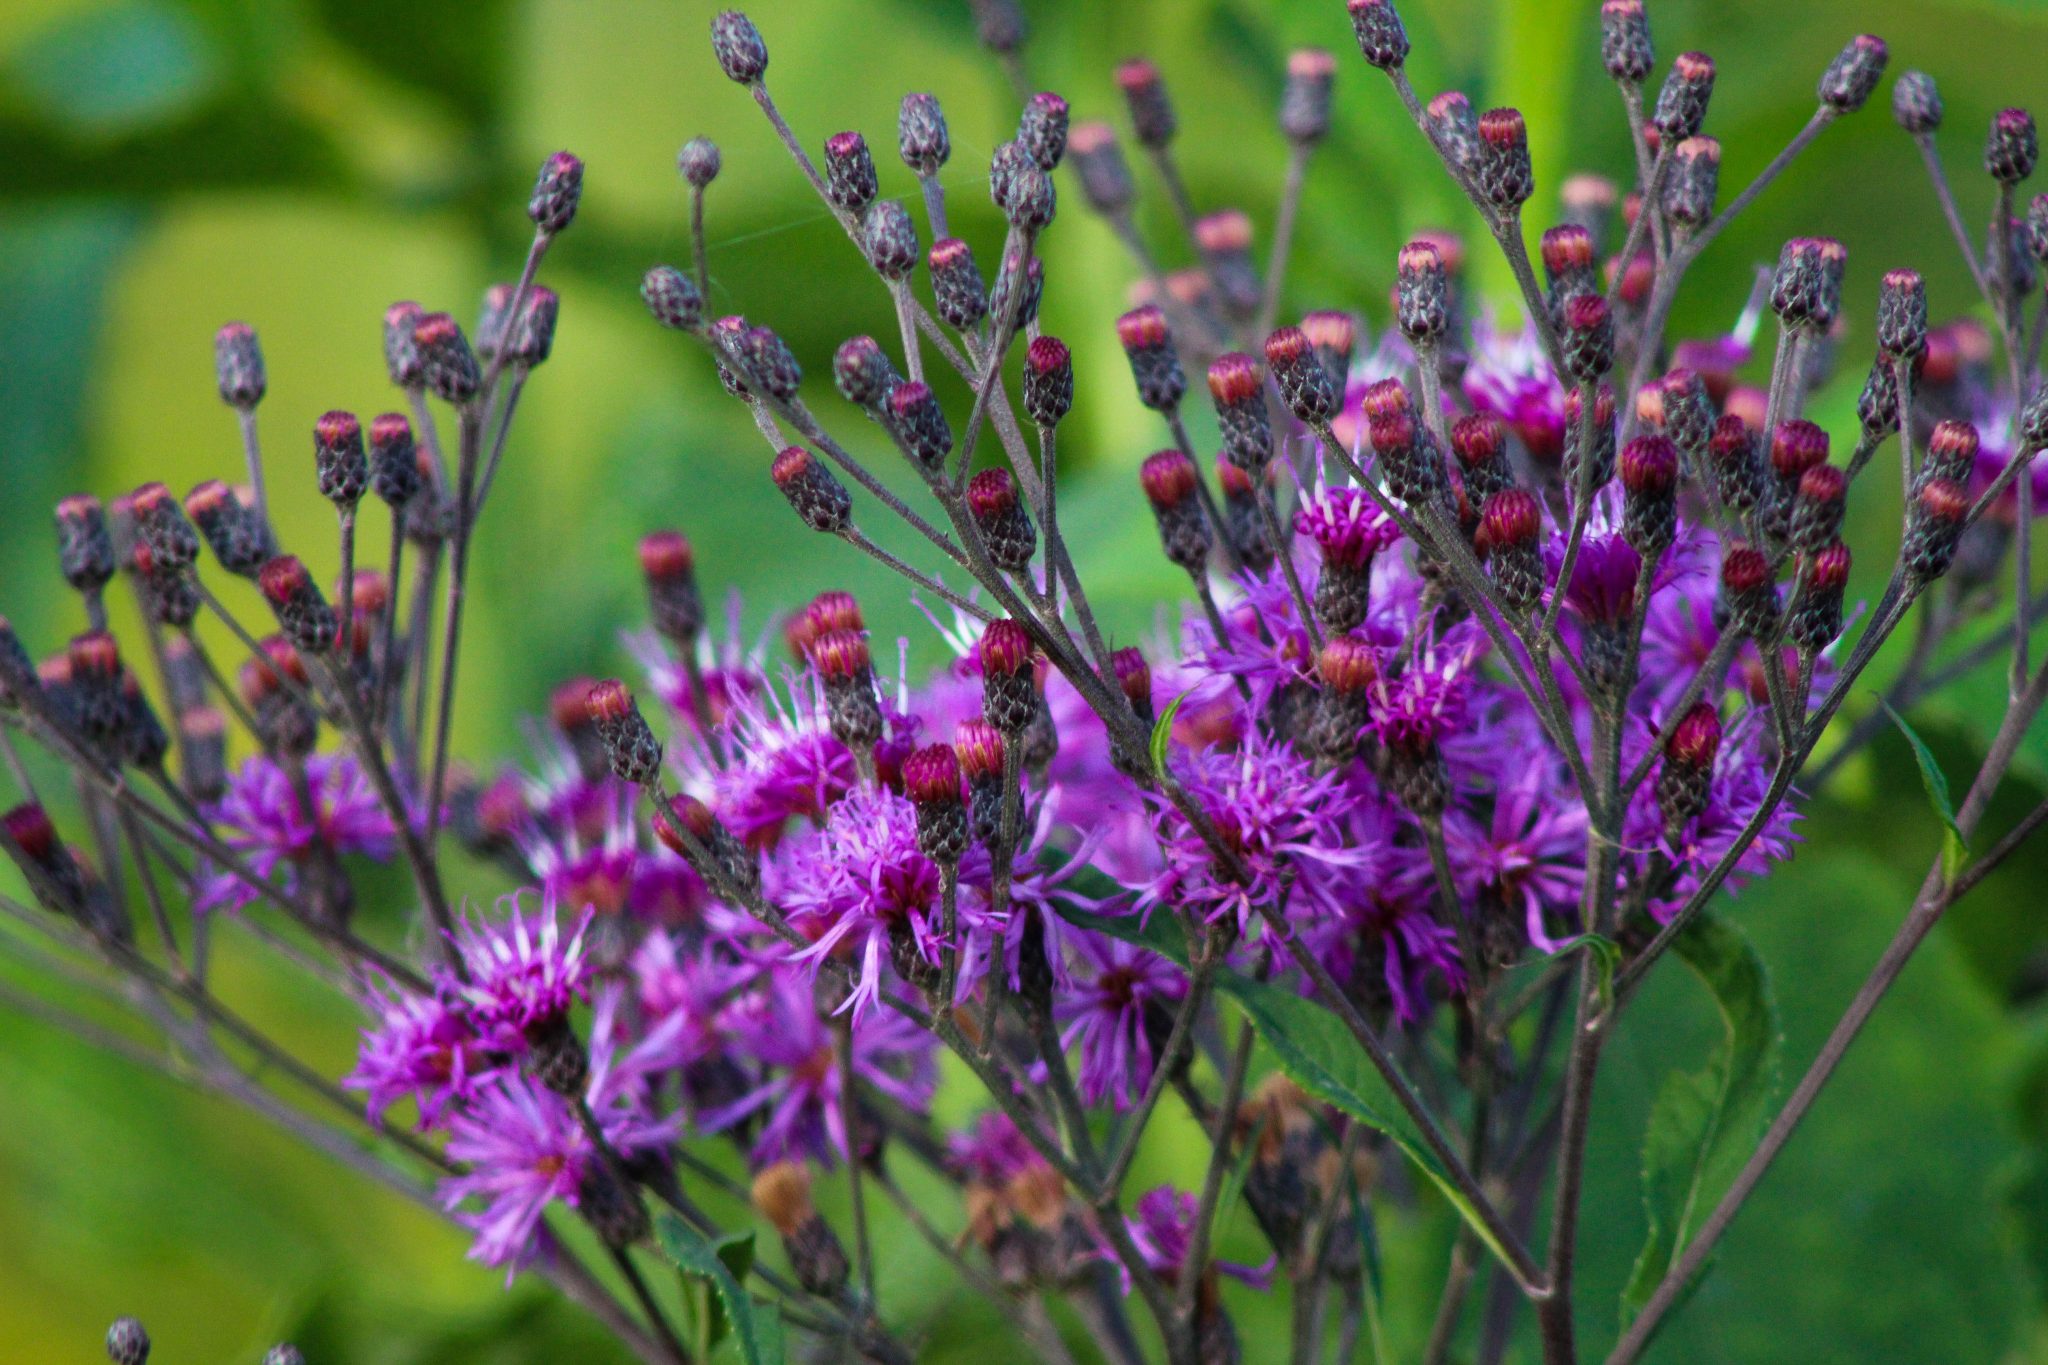 Purple flowers, sometimes called "heather"